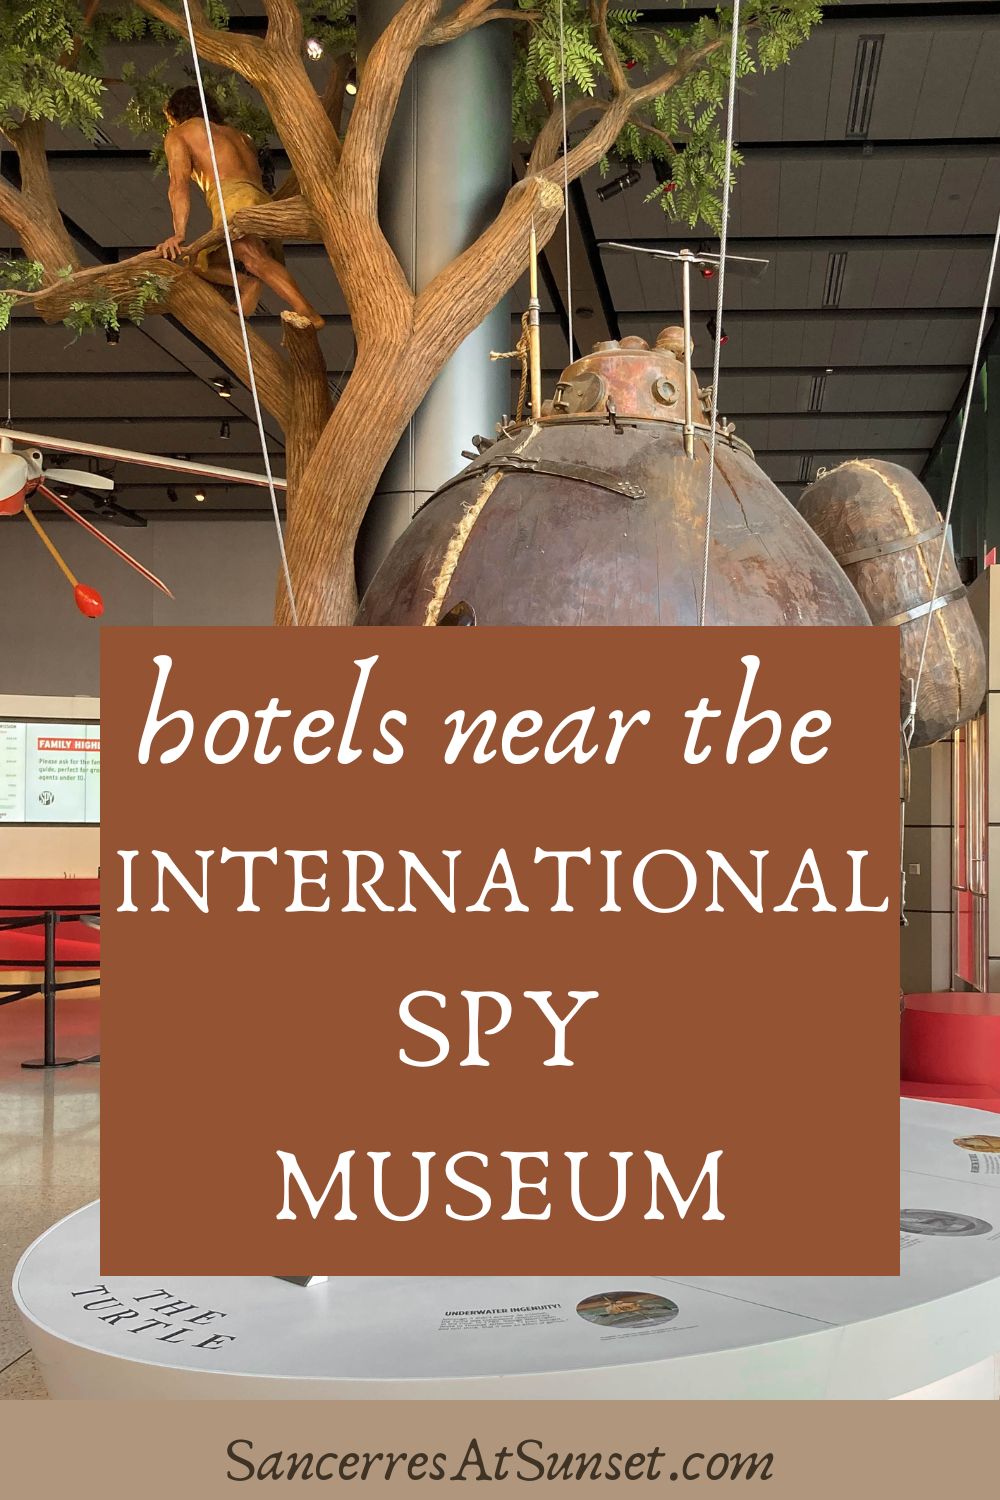 8 Hotels near the International Spy Museum in Washington, D.C.